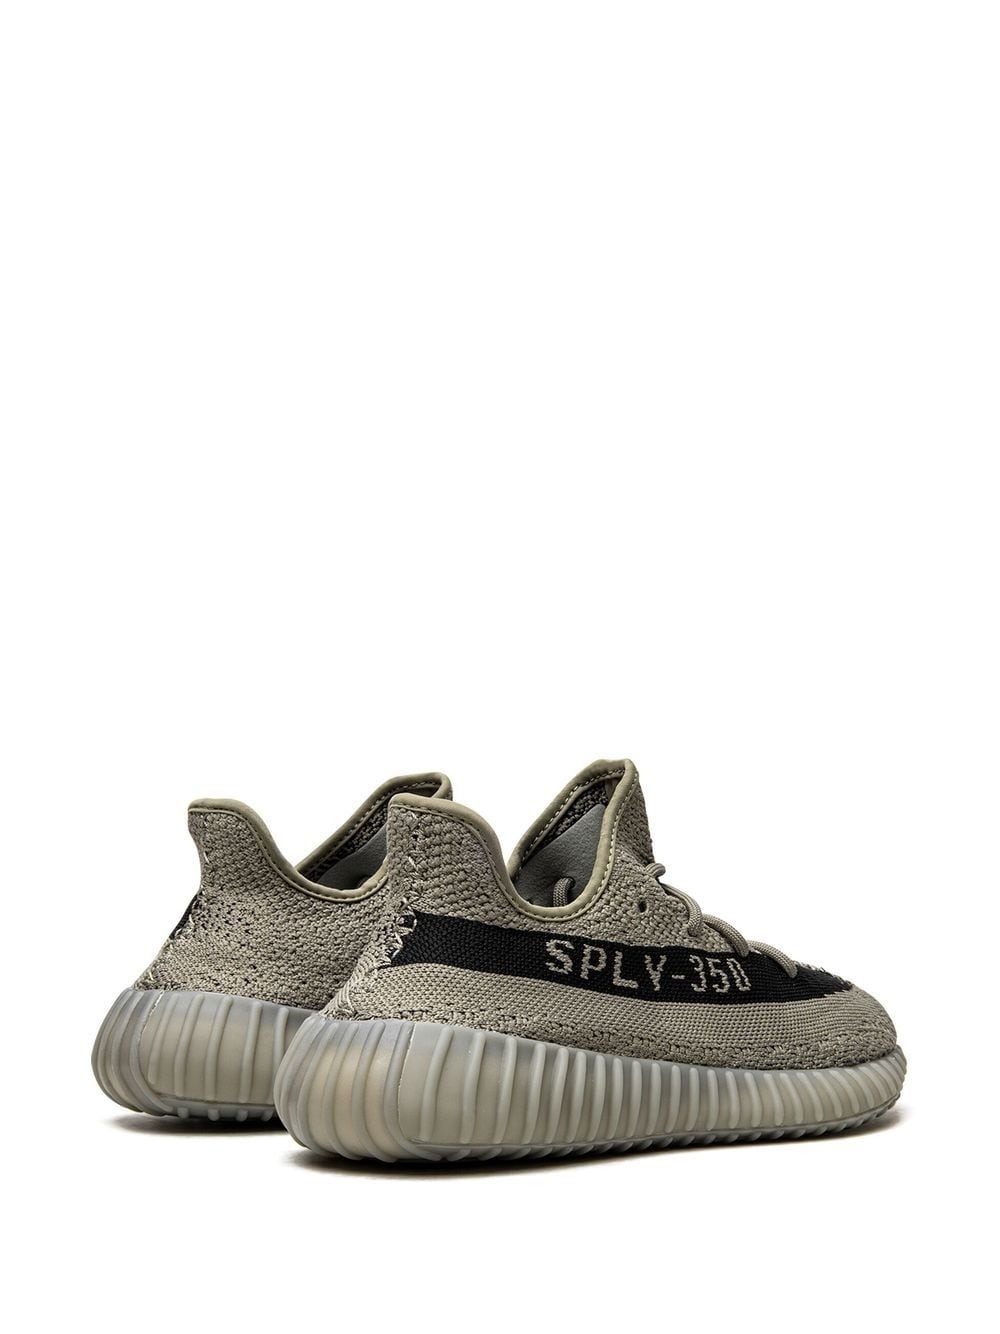 Yeezy 350 v2 "Granite" sneakers - 3